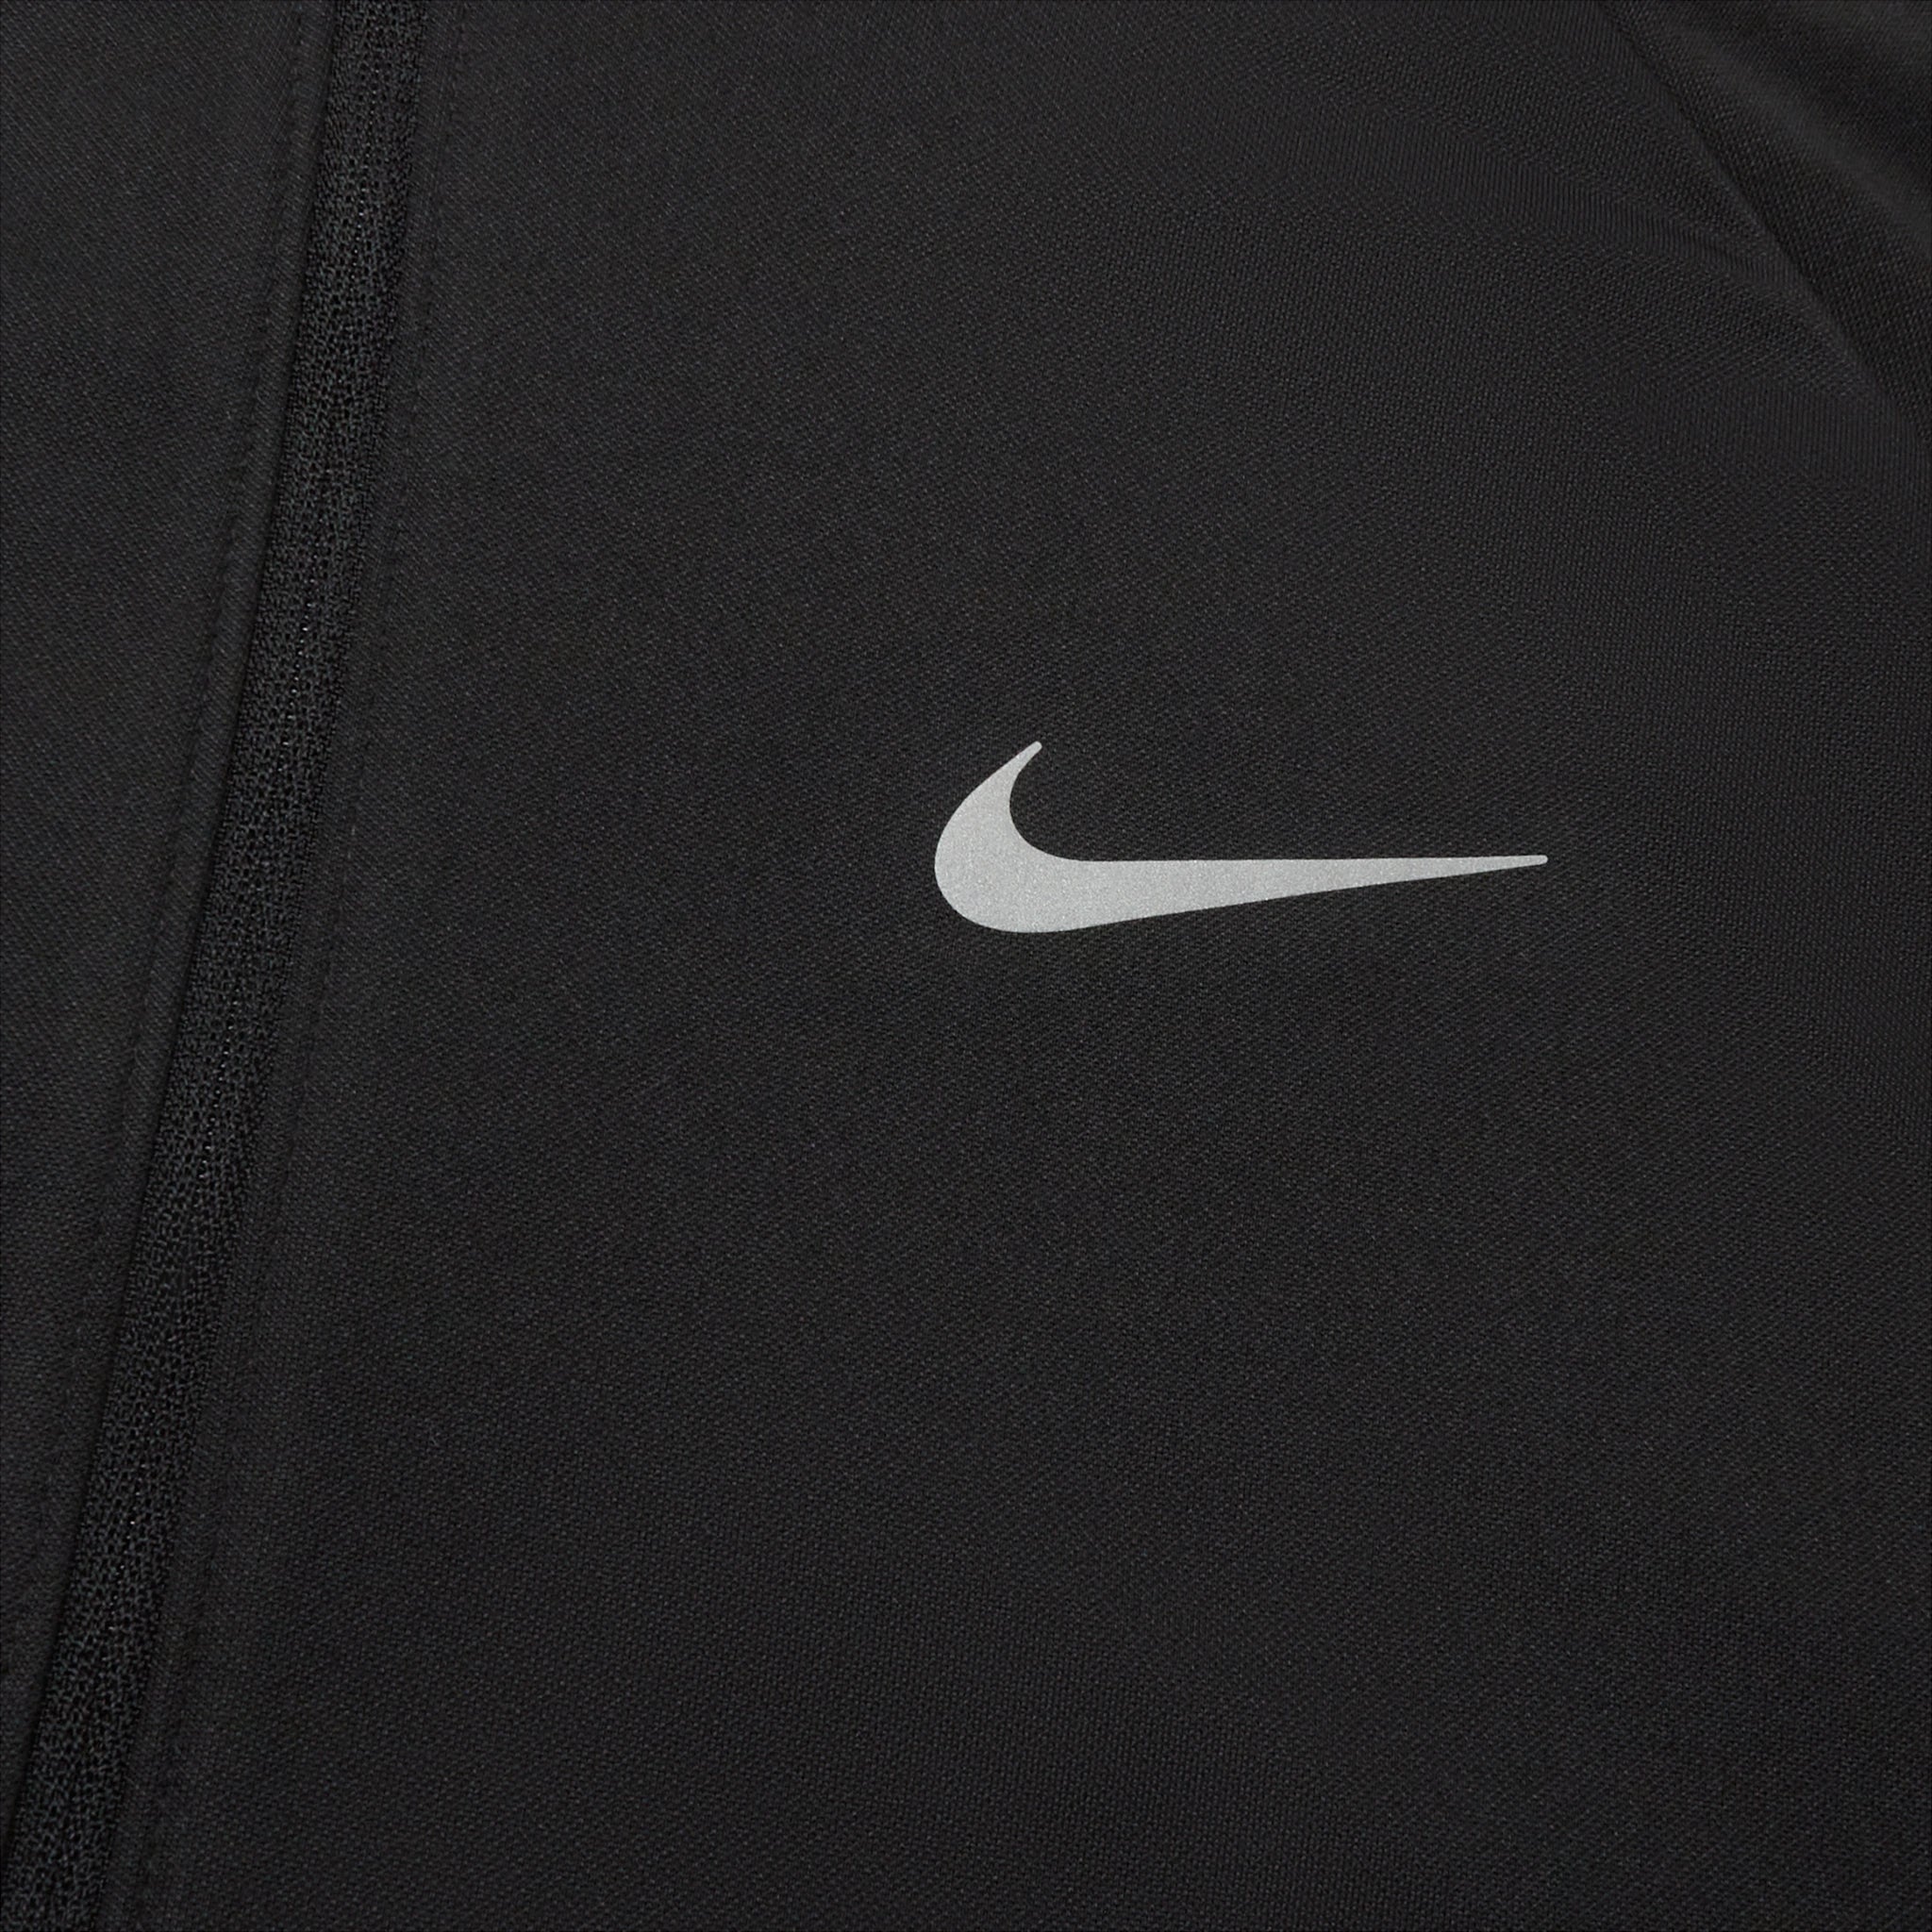 Logo view of Nike Therma Black Jacket DH6682-010